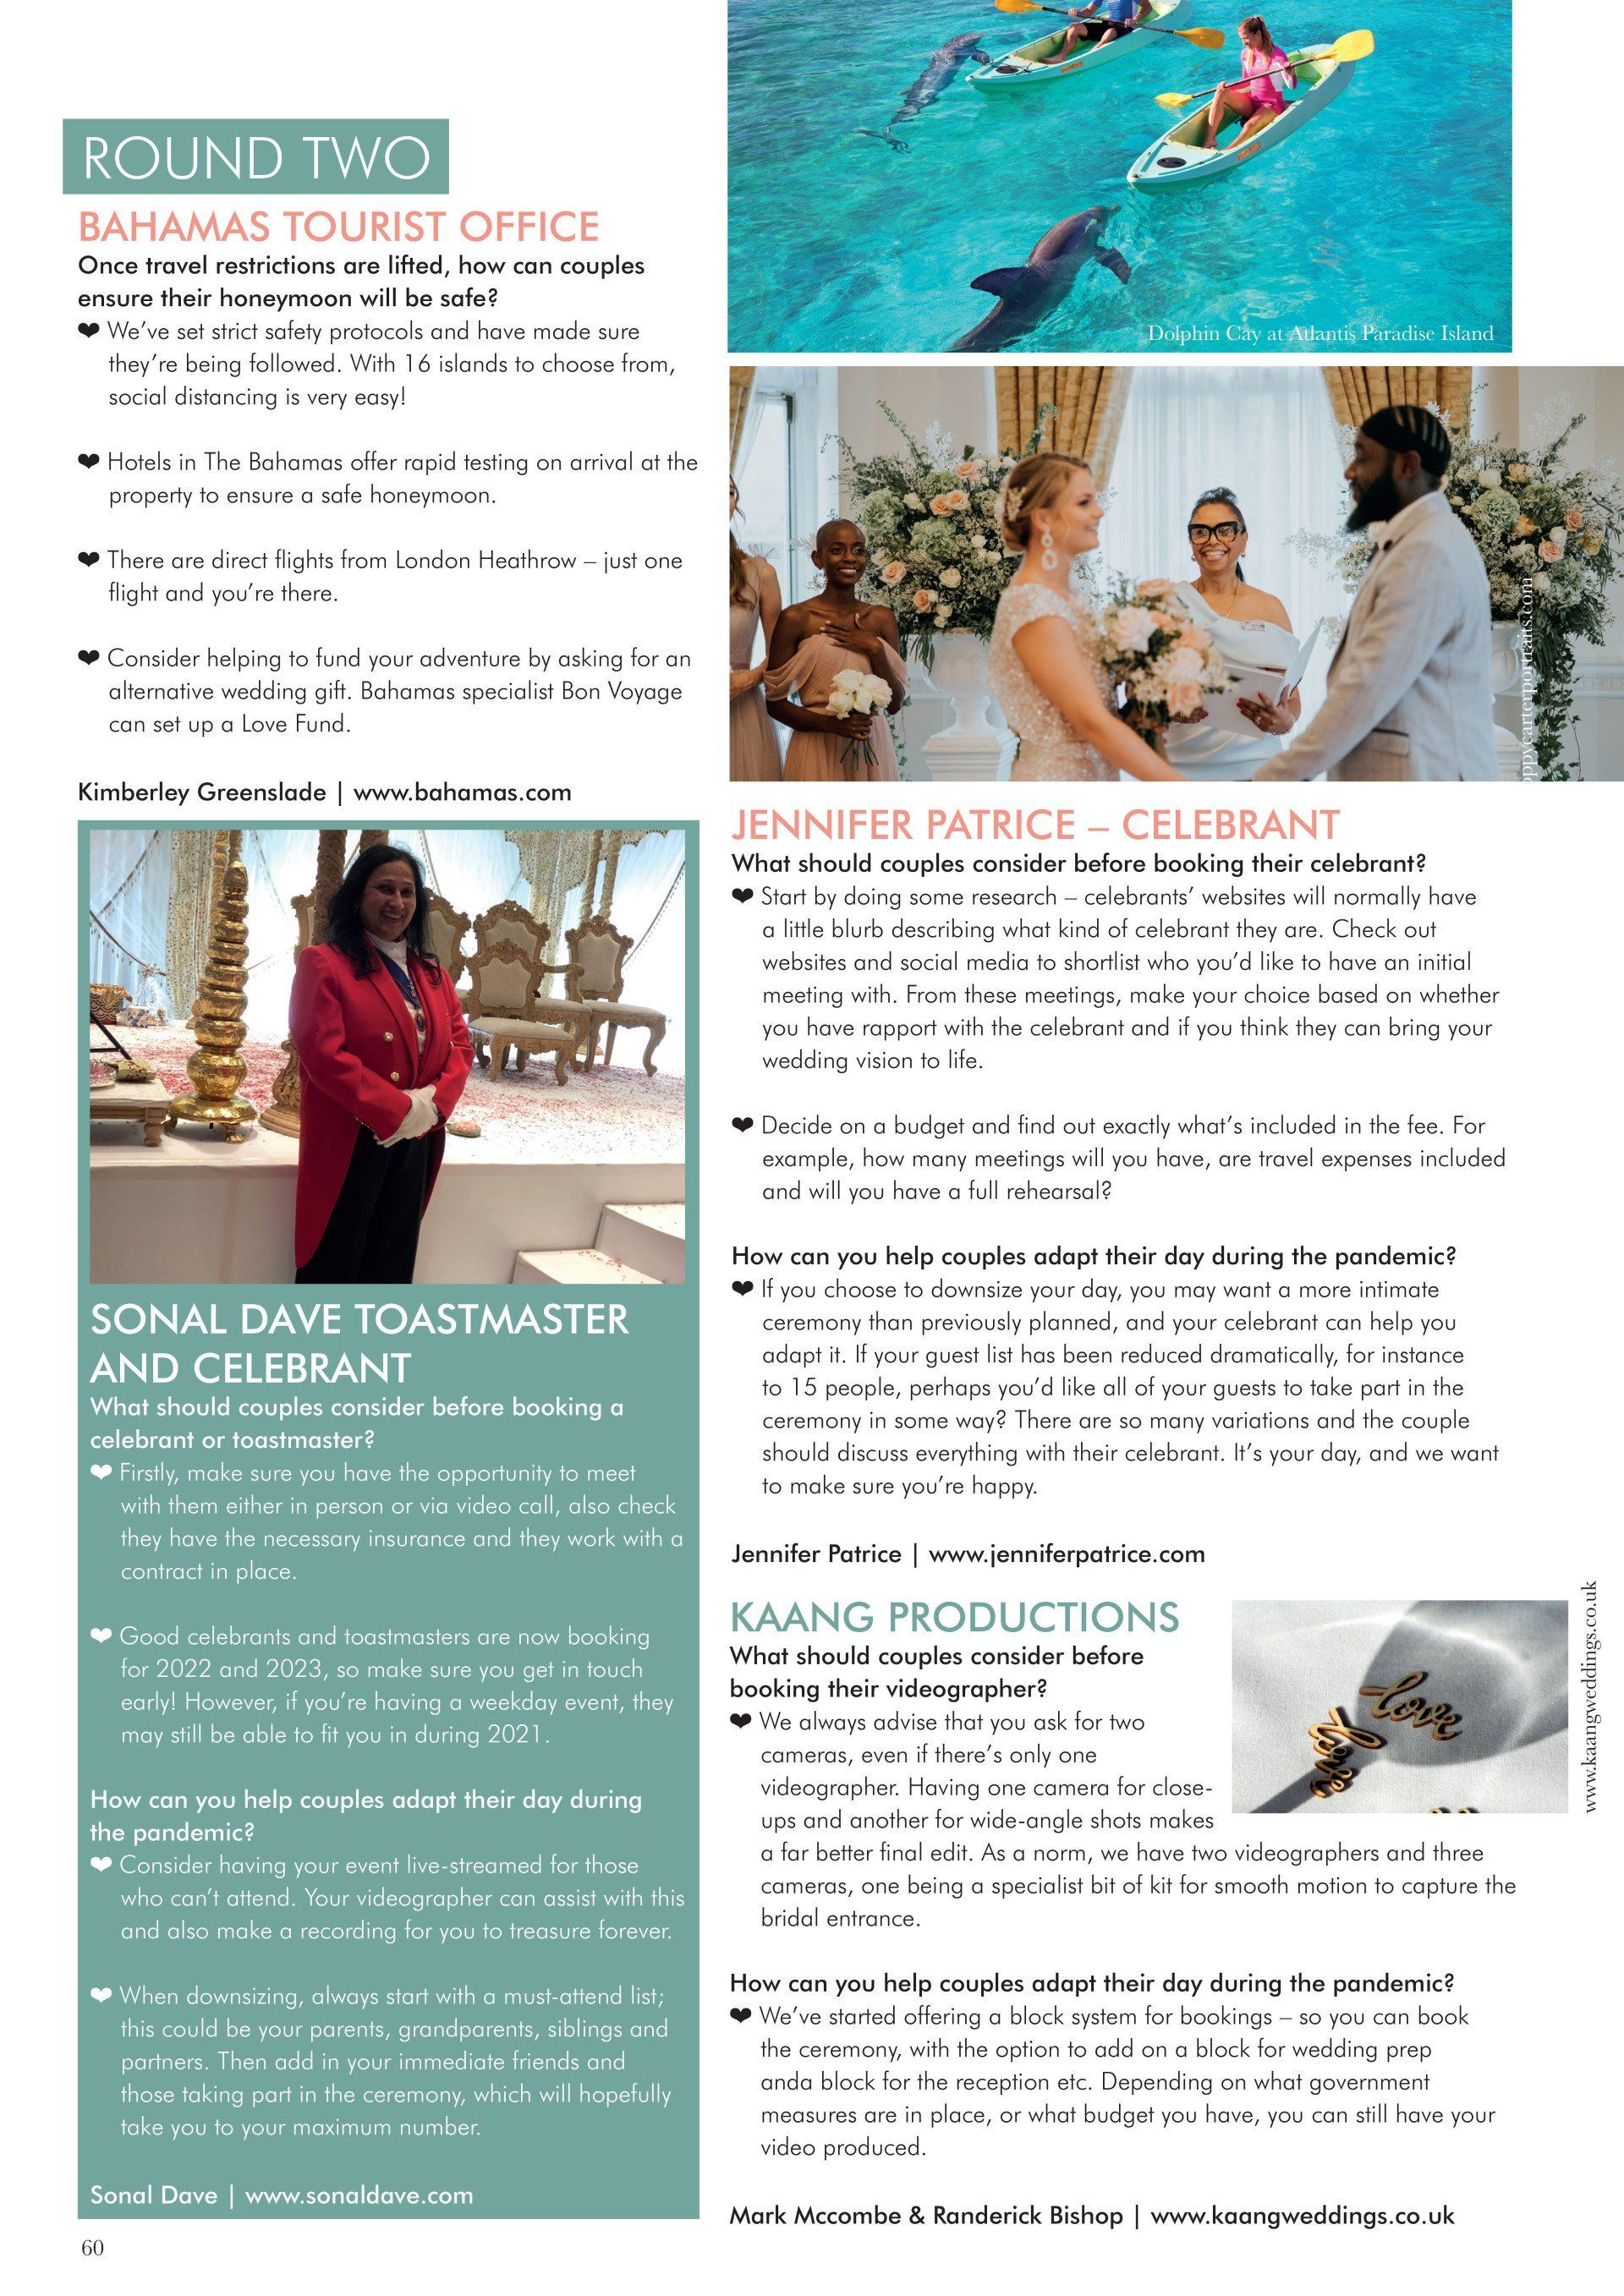 Your London Wedding magazine vendor advice and top tips